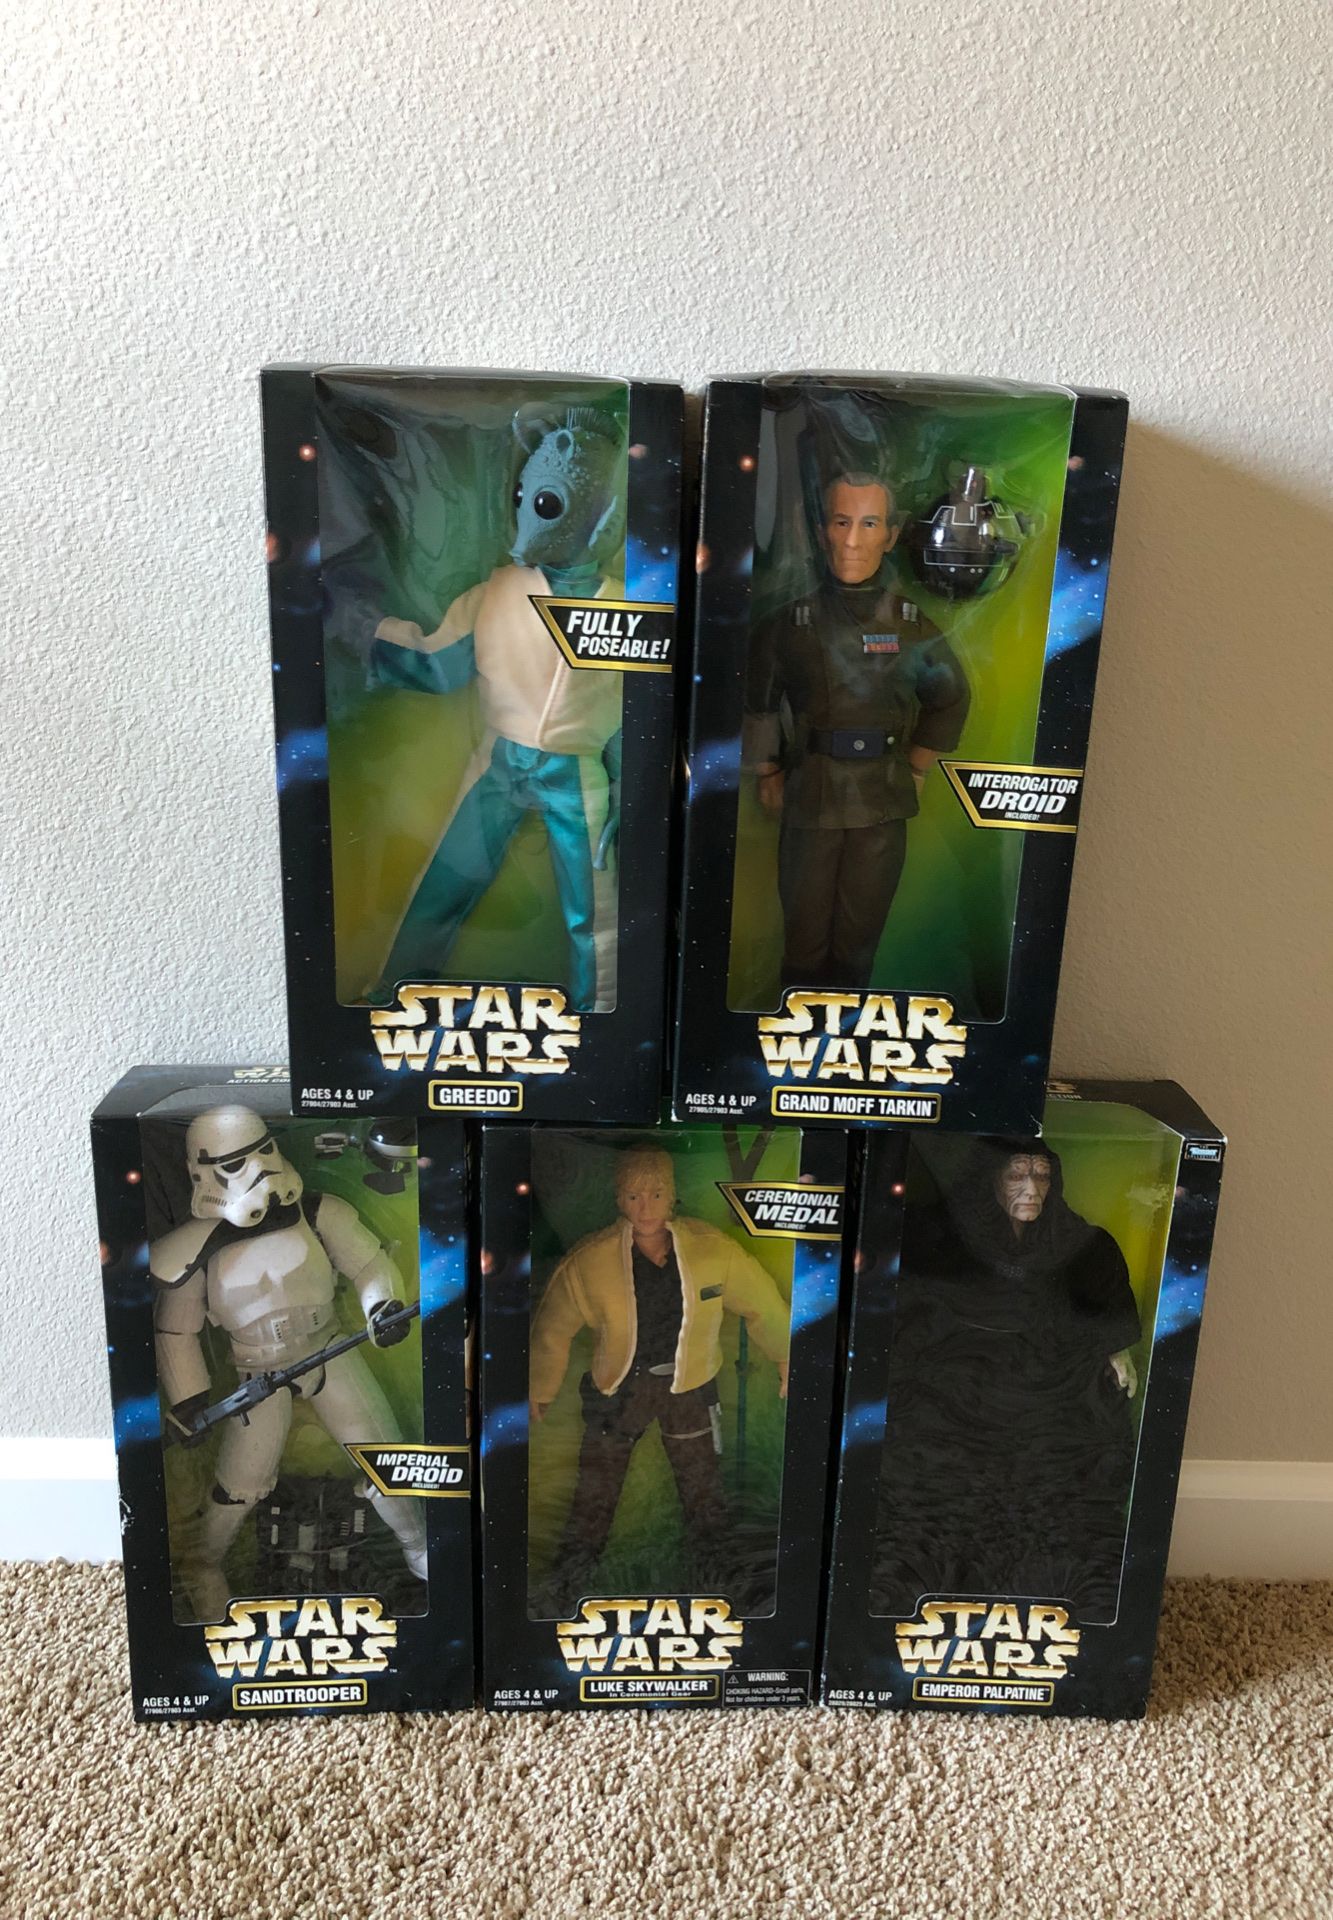 Set of 5 Star Wars Collectible Action Figures Original Box